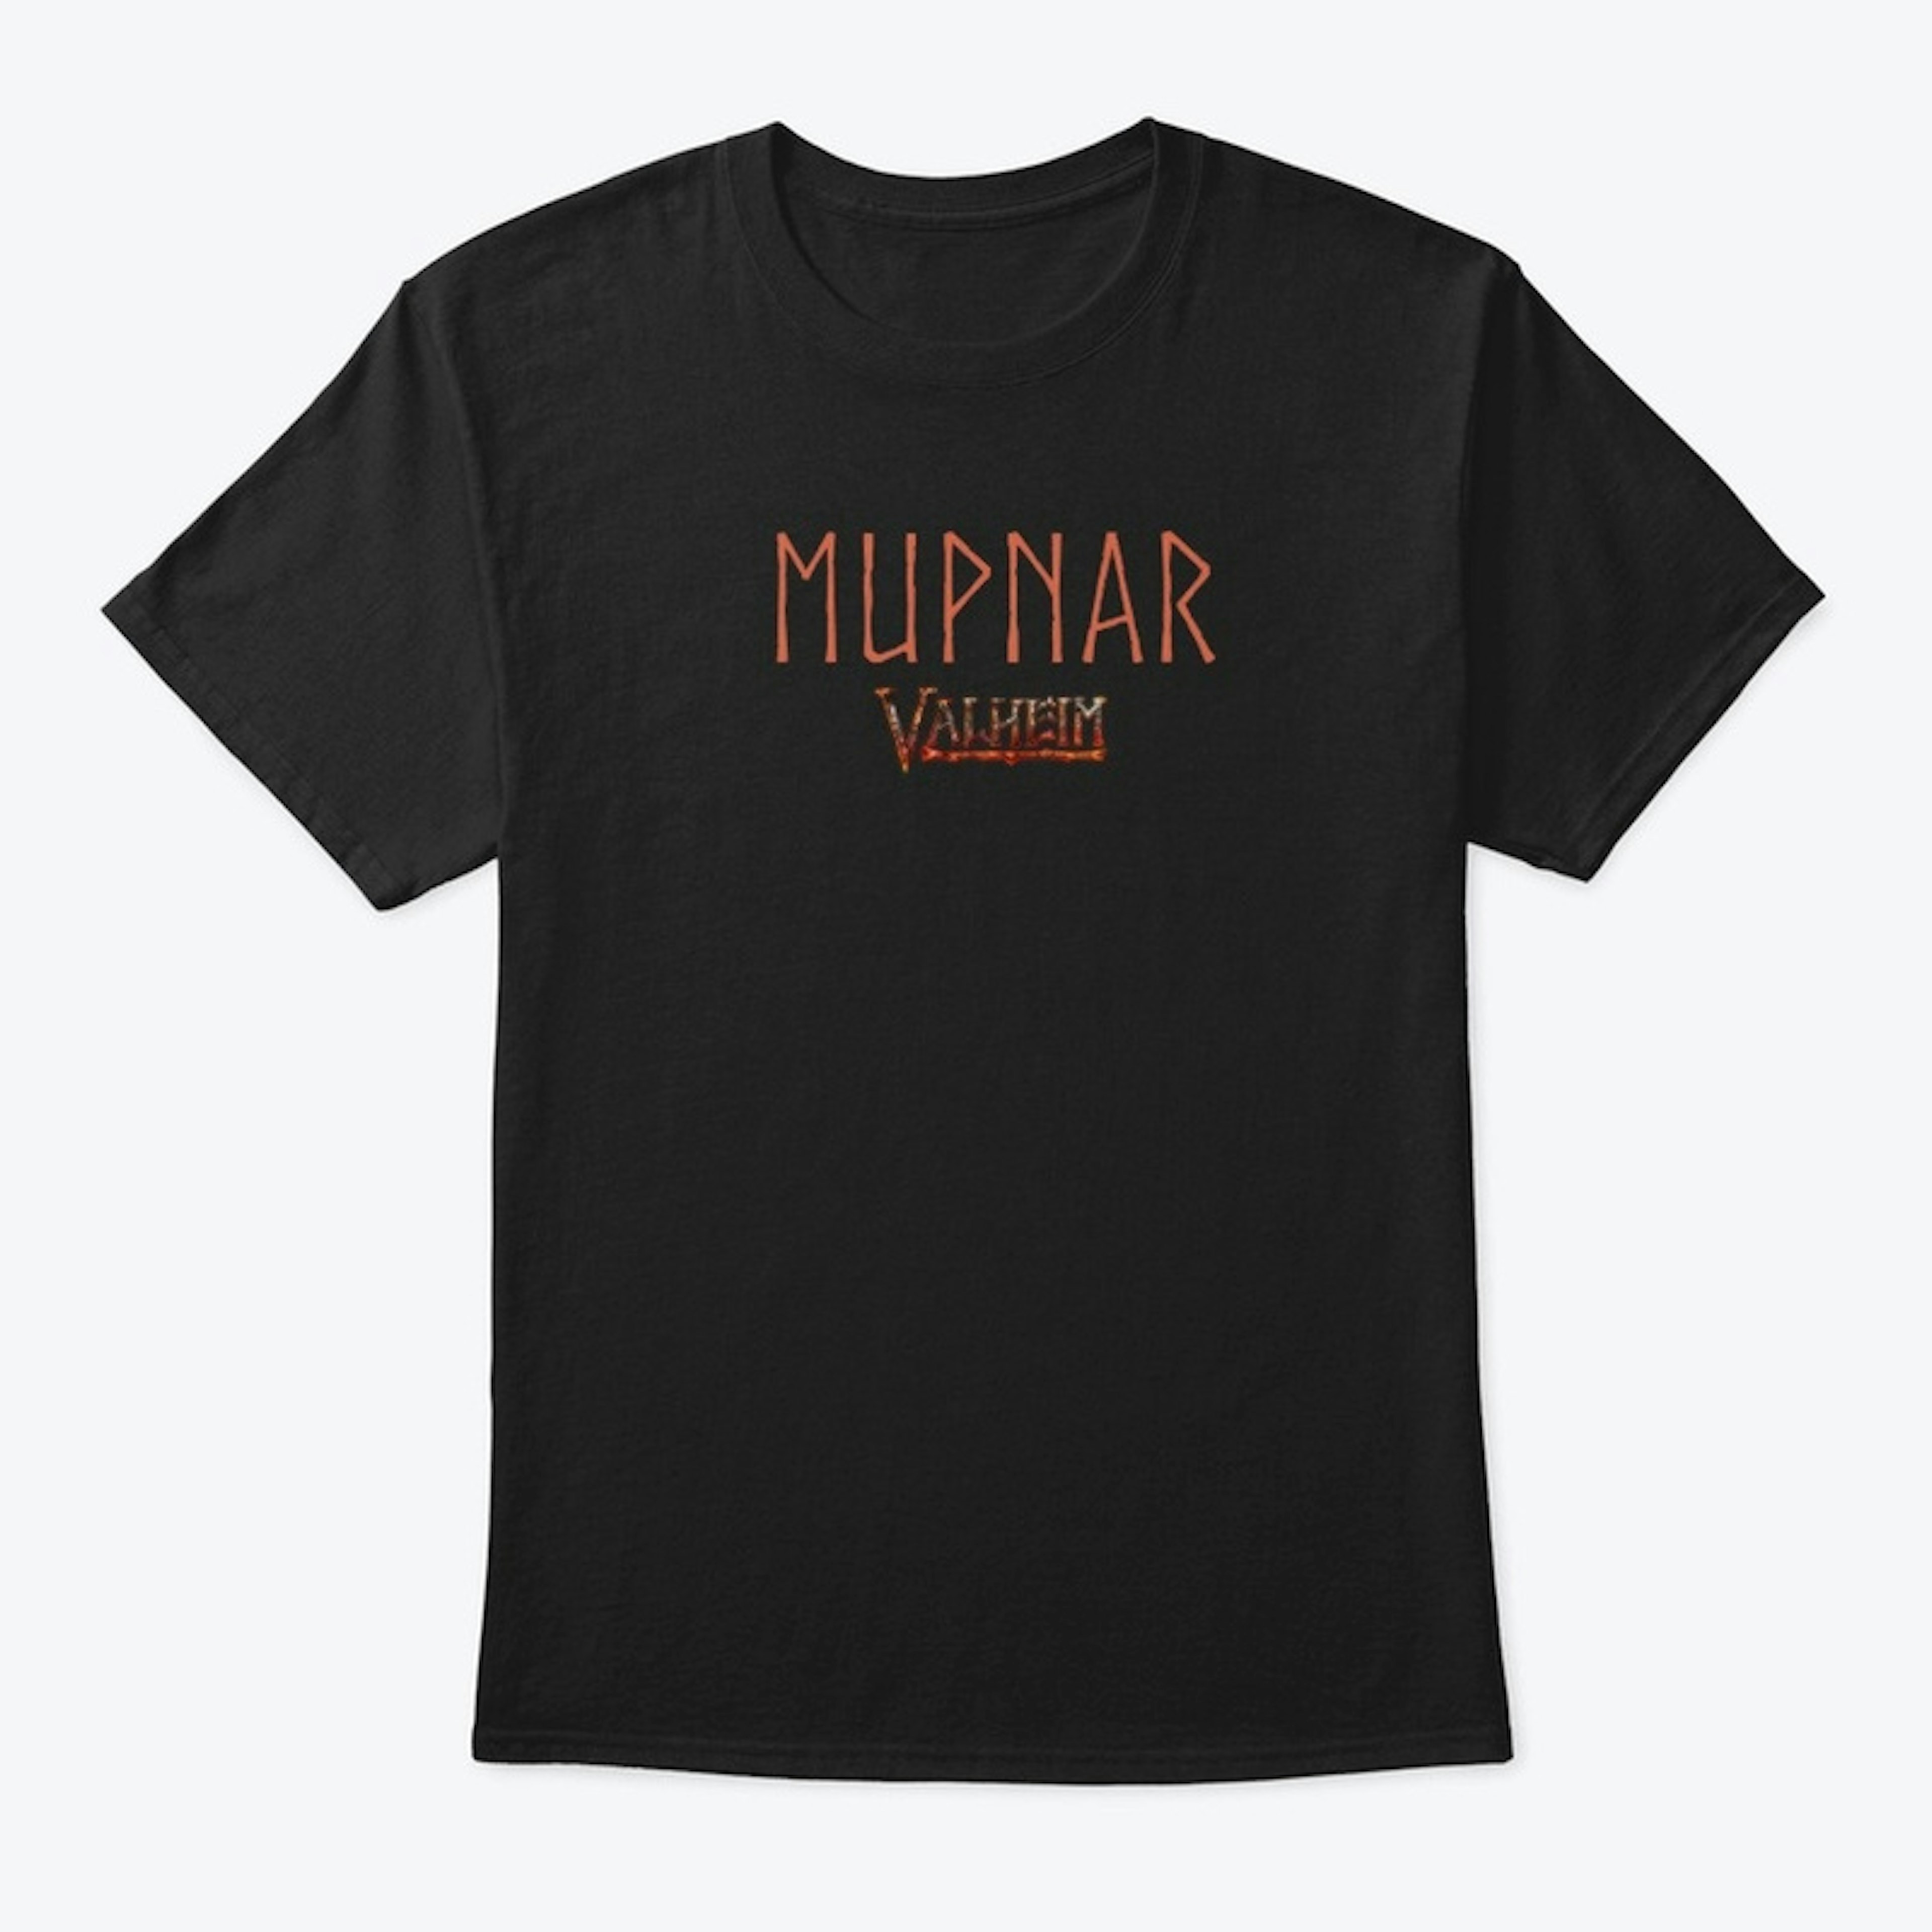 Mupnar Collection